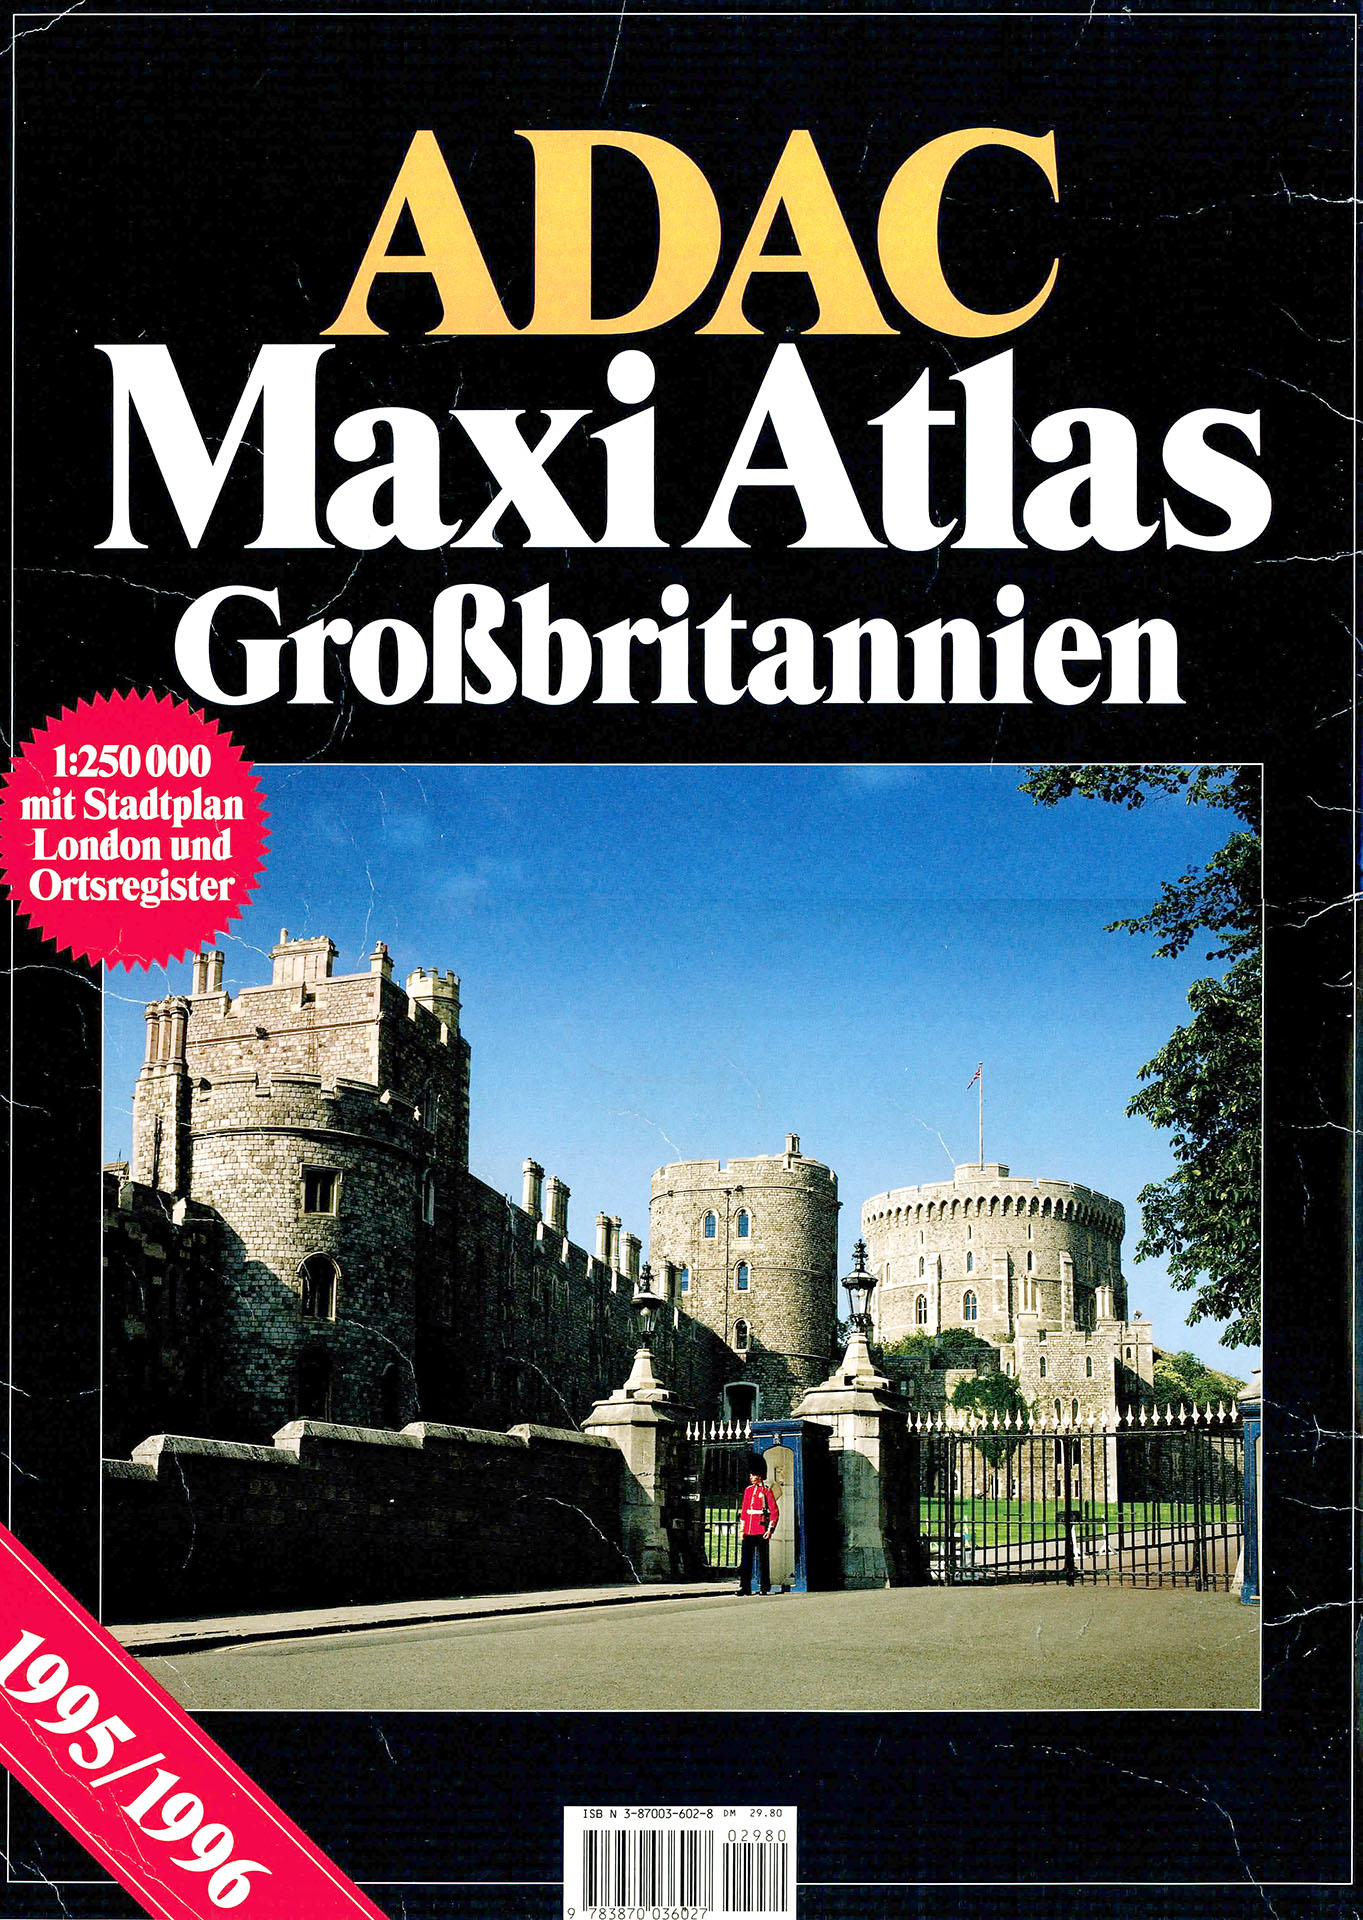 ADAC - Maxi Atlas Großbritannien